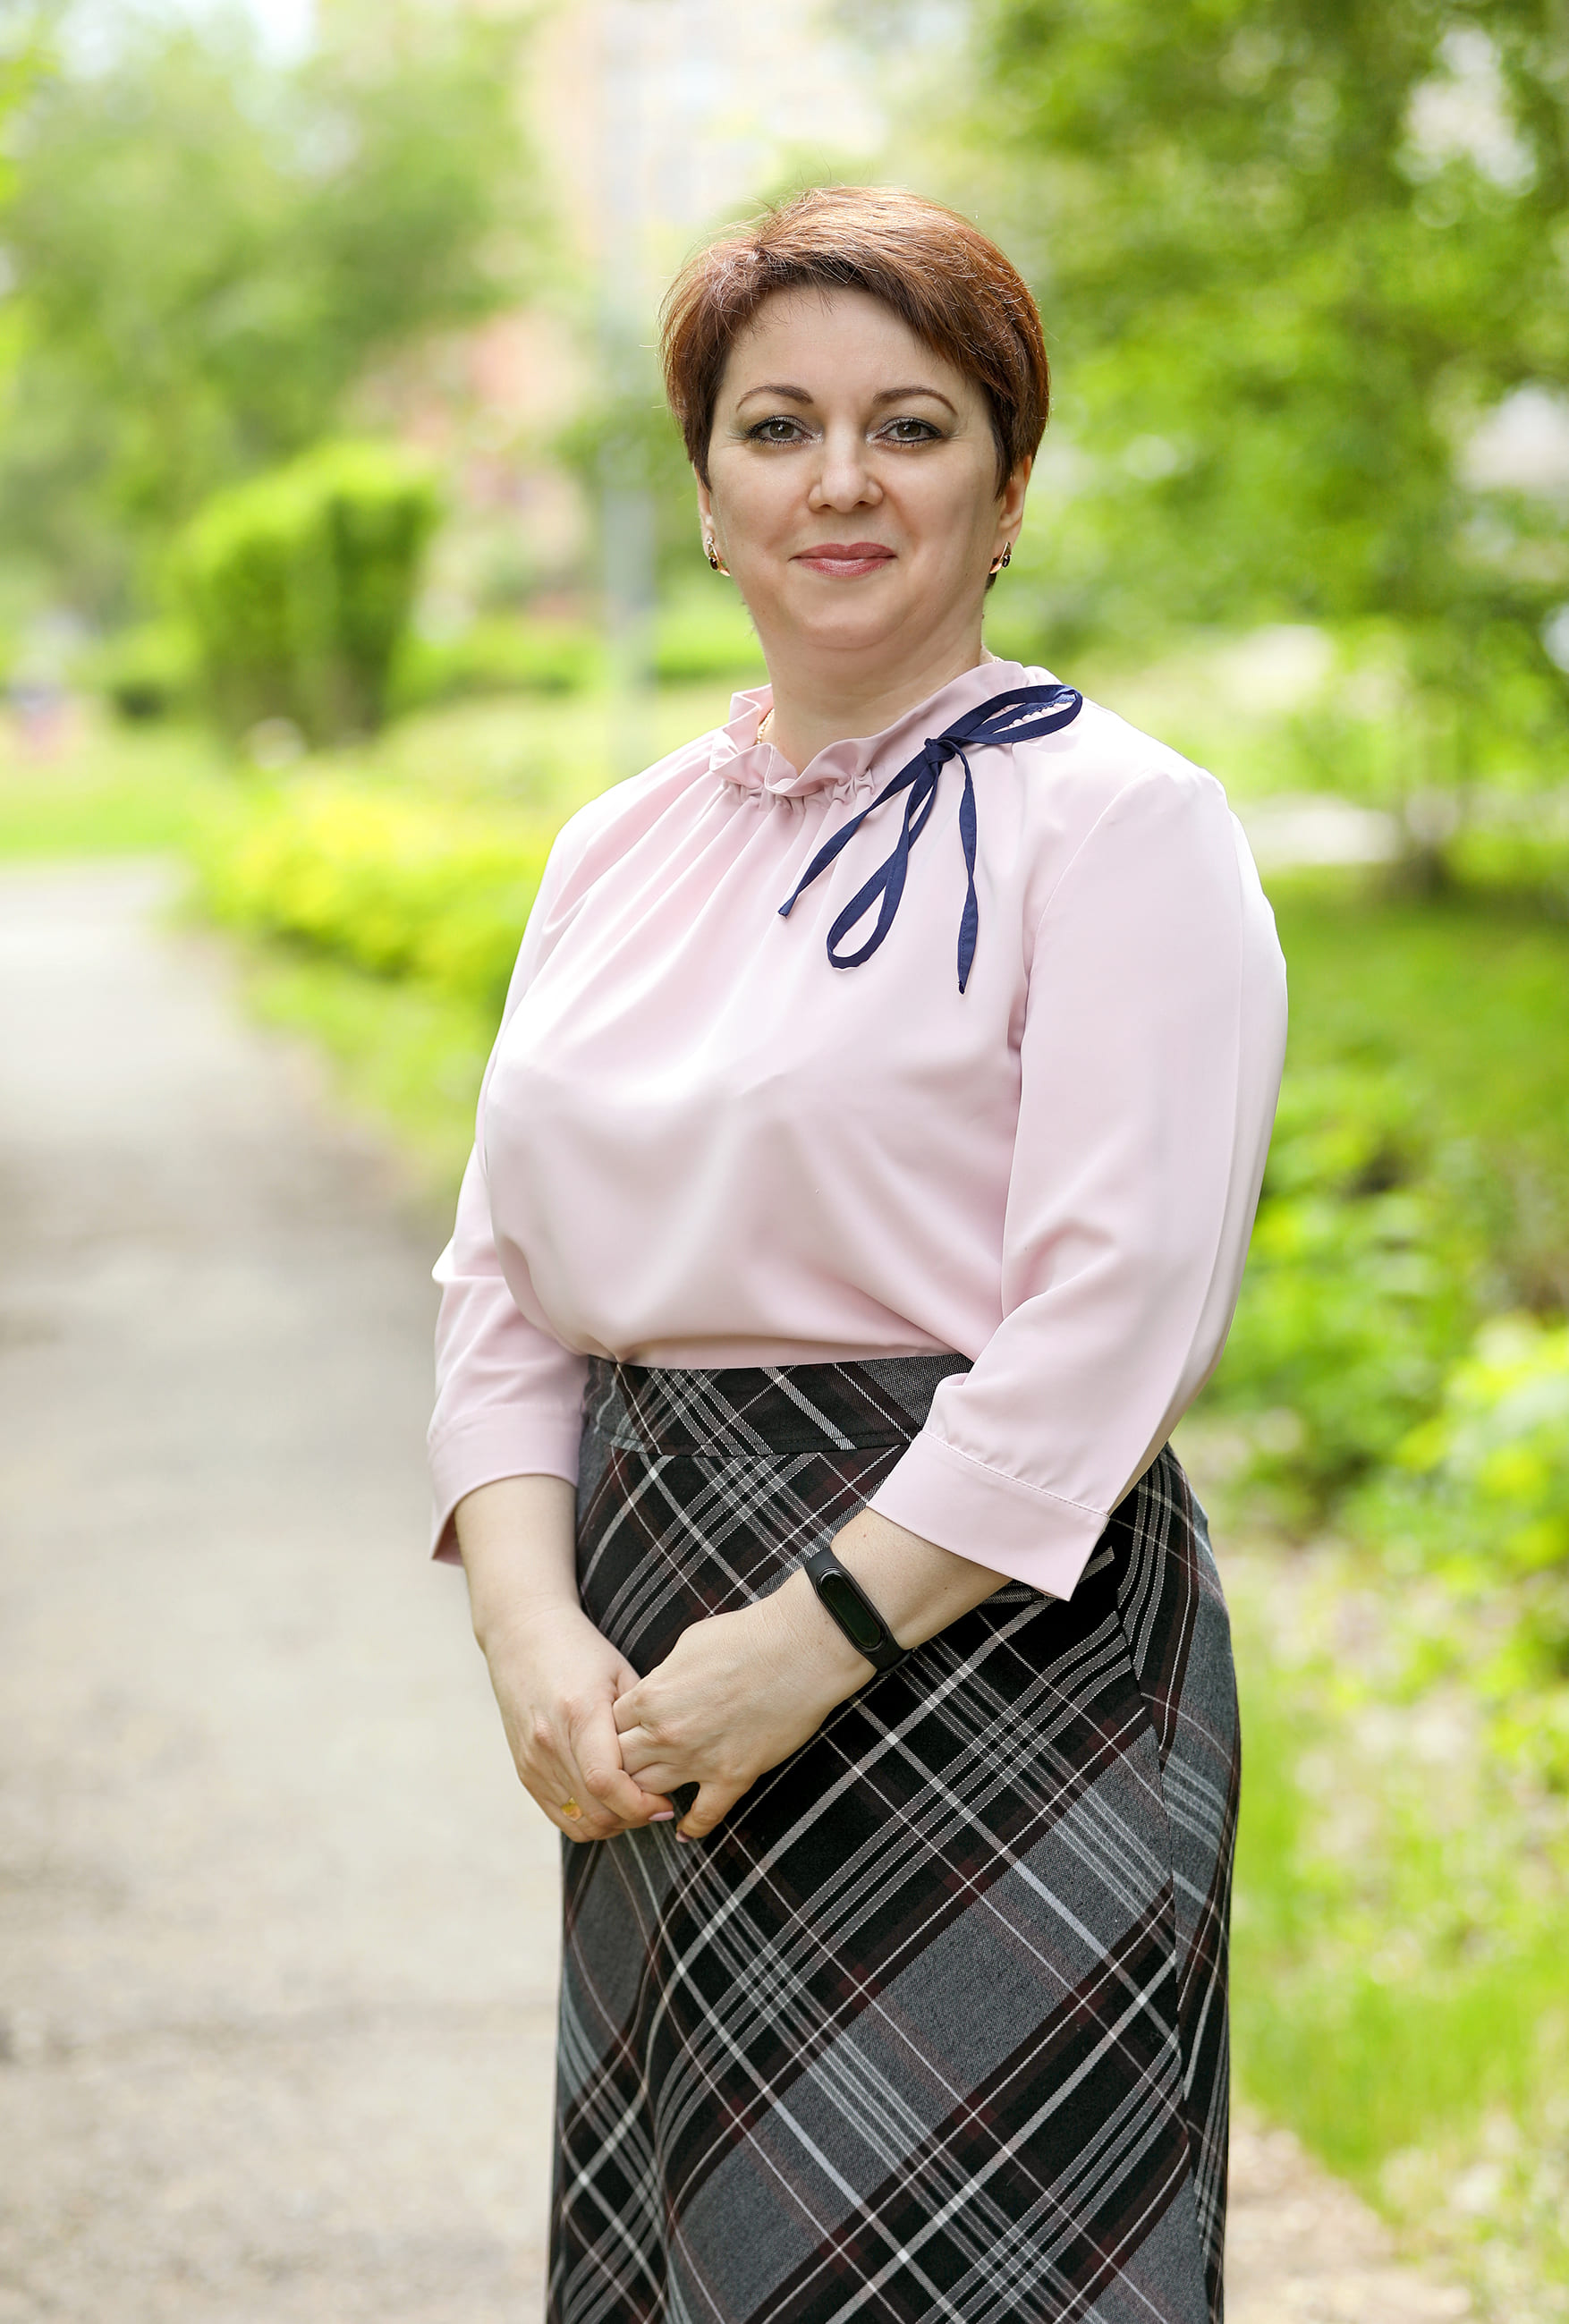 Спасенкова Ольга Владимировна.